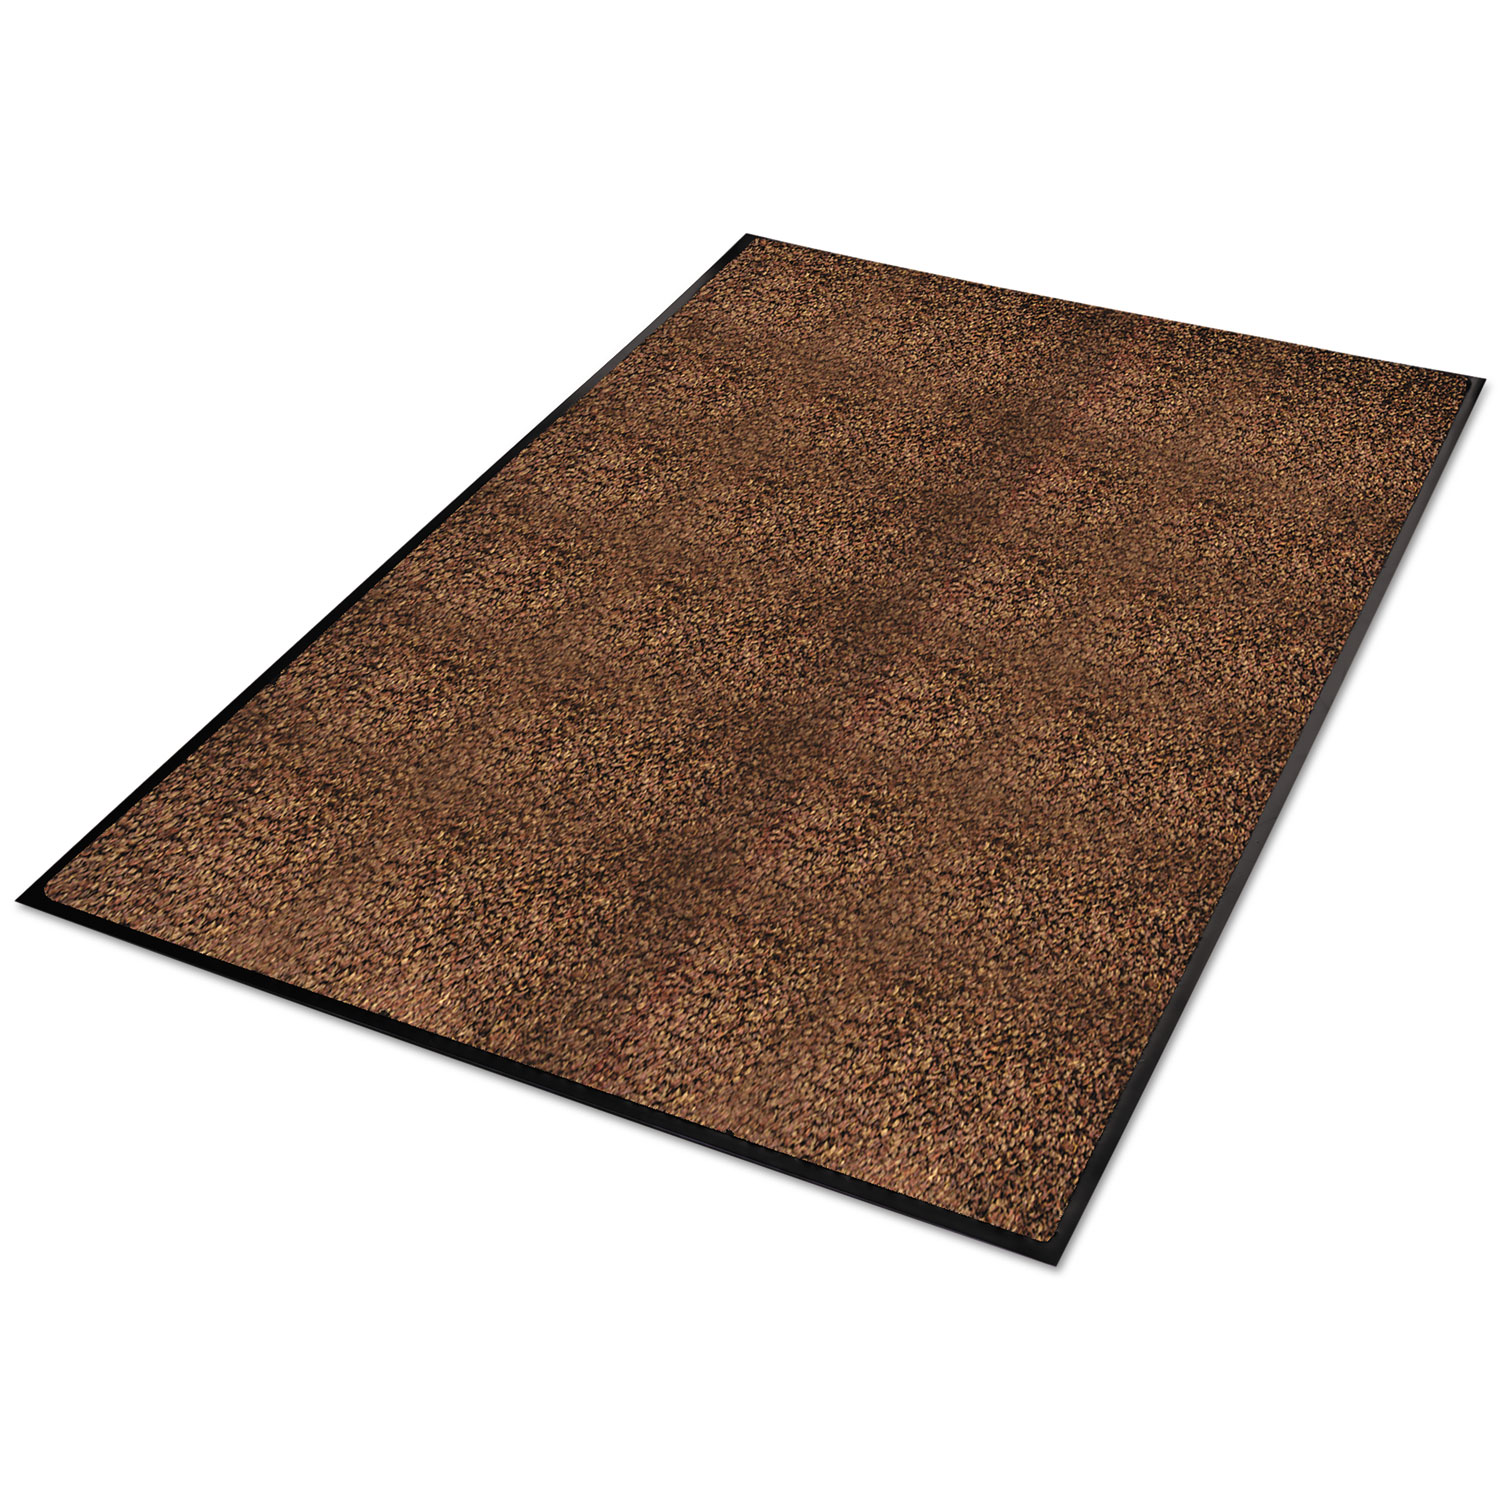  Guardian 94030550 Platinum Series Indoor Wiper Mat, Nylon/Polypropylene, 36 x 60, Brown (MLL94030550) 